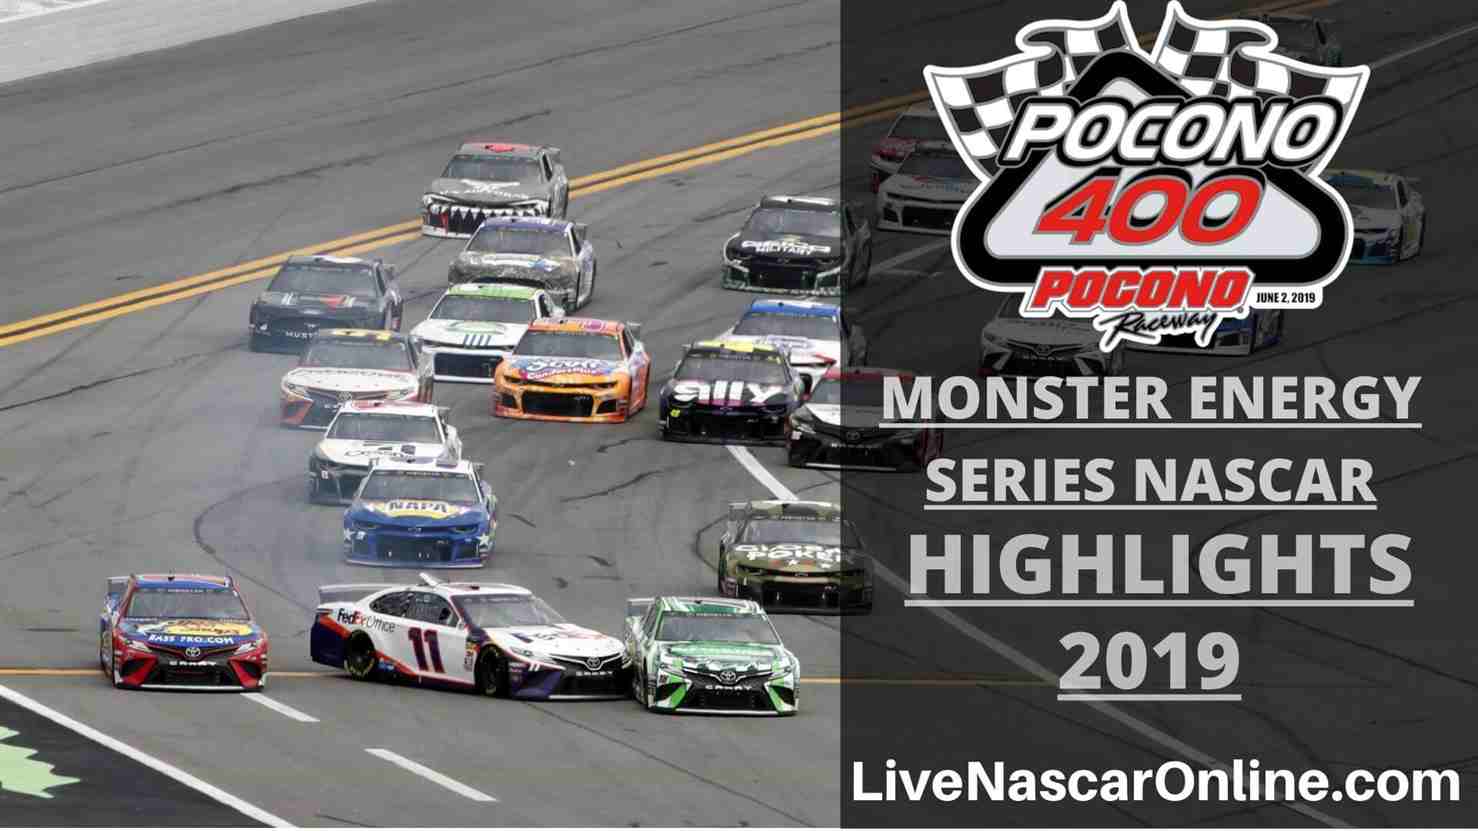 NASCAR Monster Energy Series POCONO 400 Highlights 2019 Online